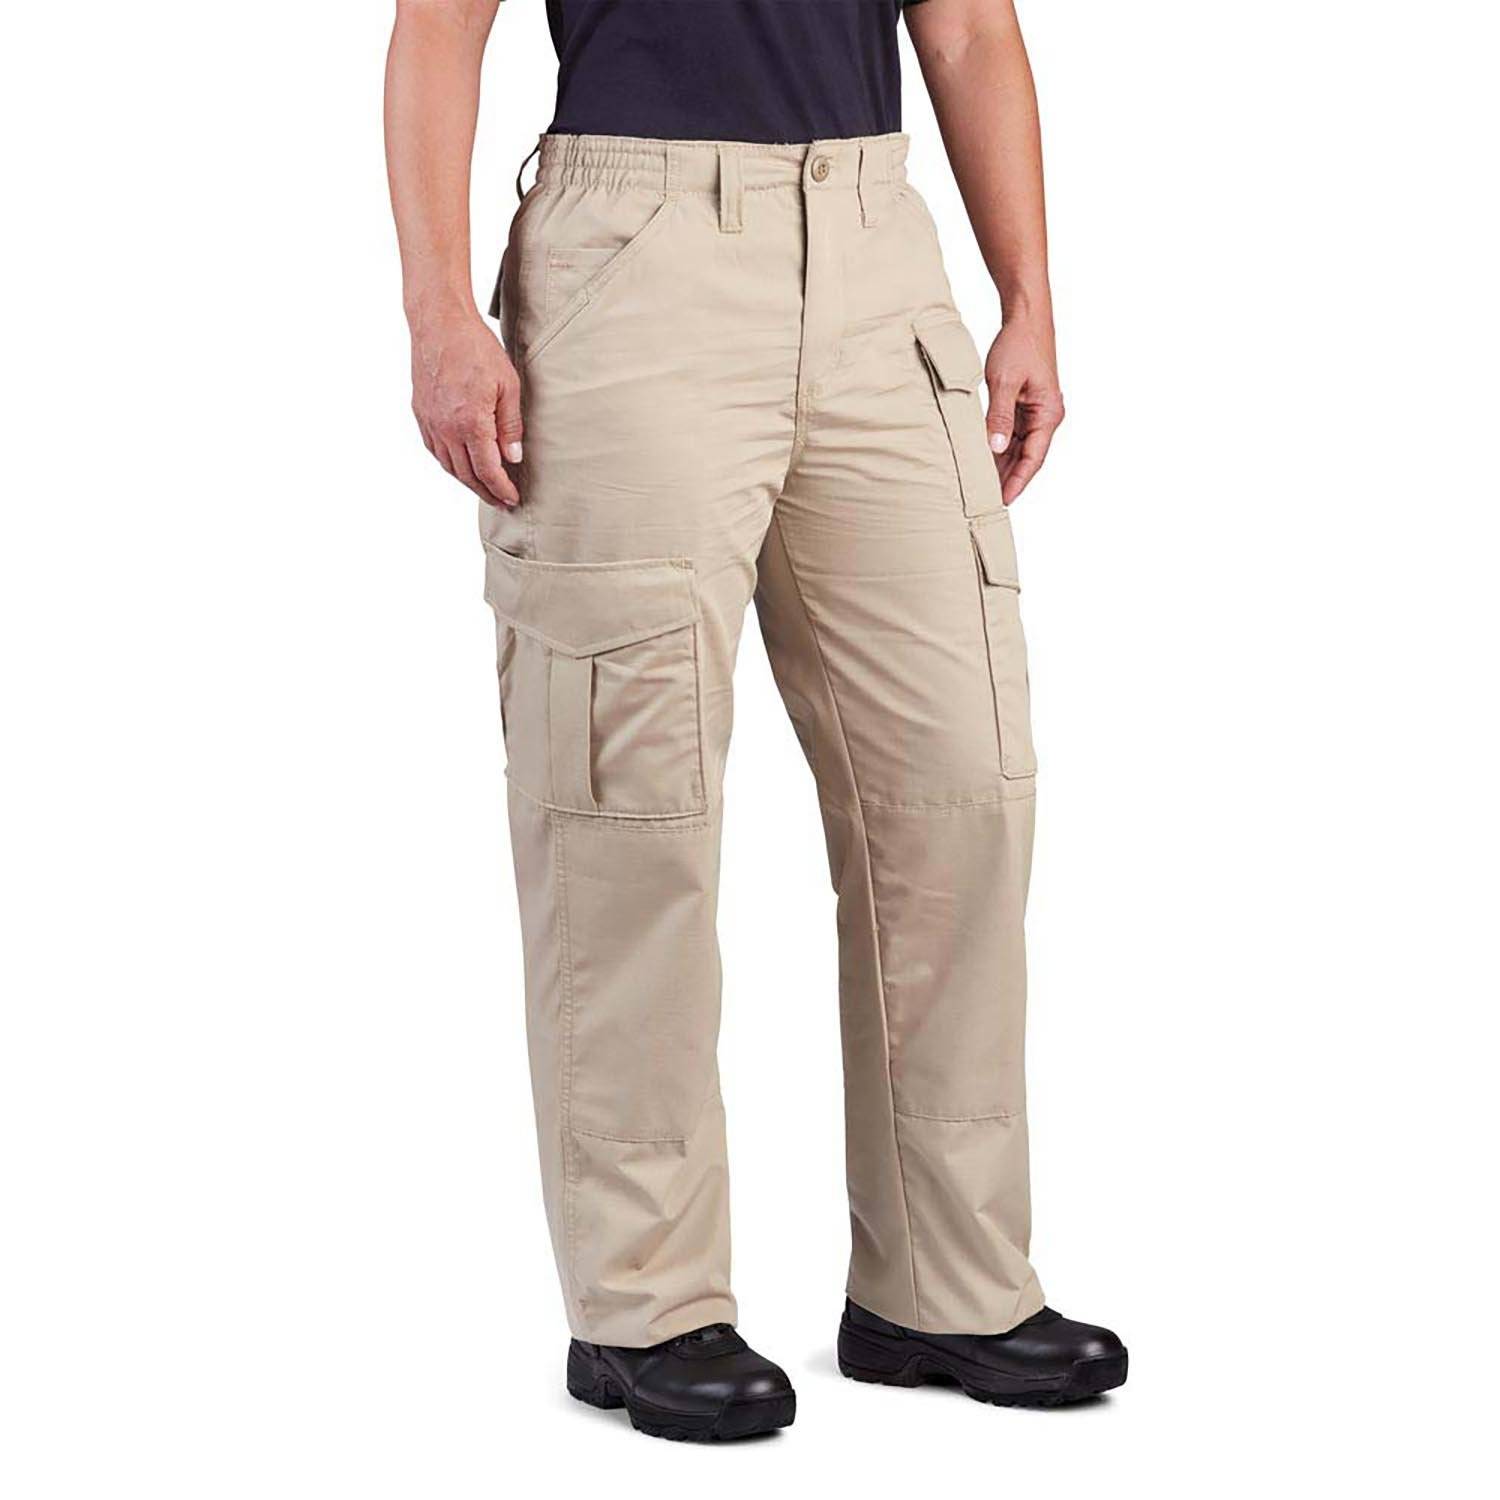 Propper® Women's Pant Size Chart